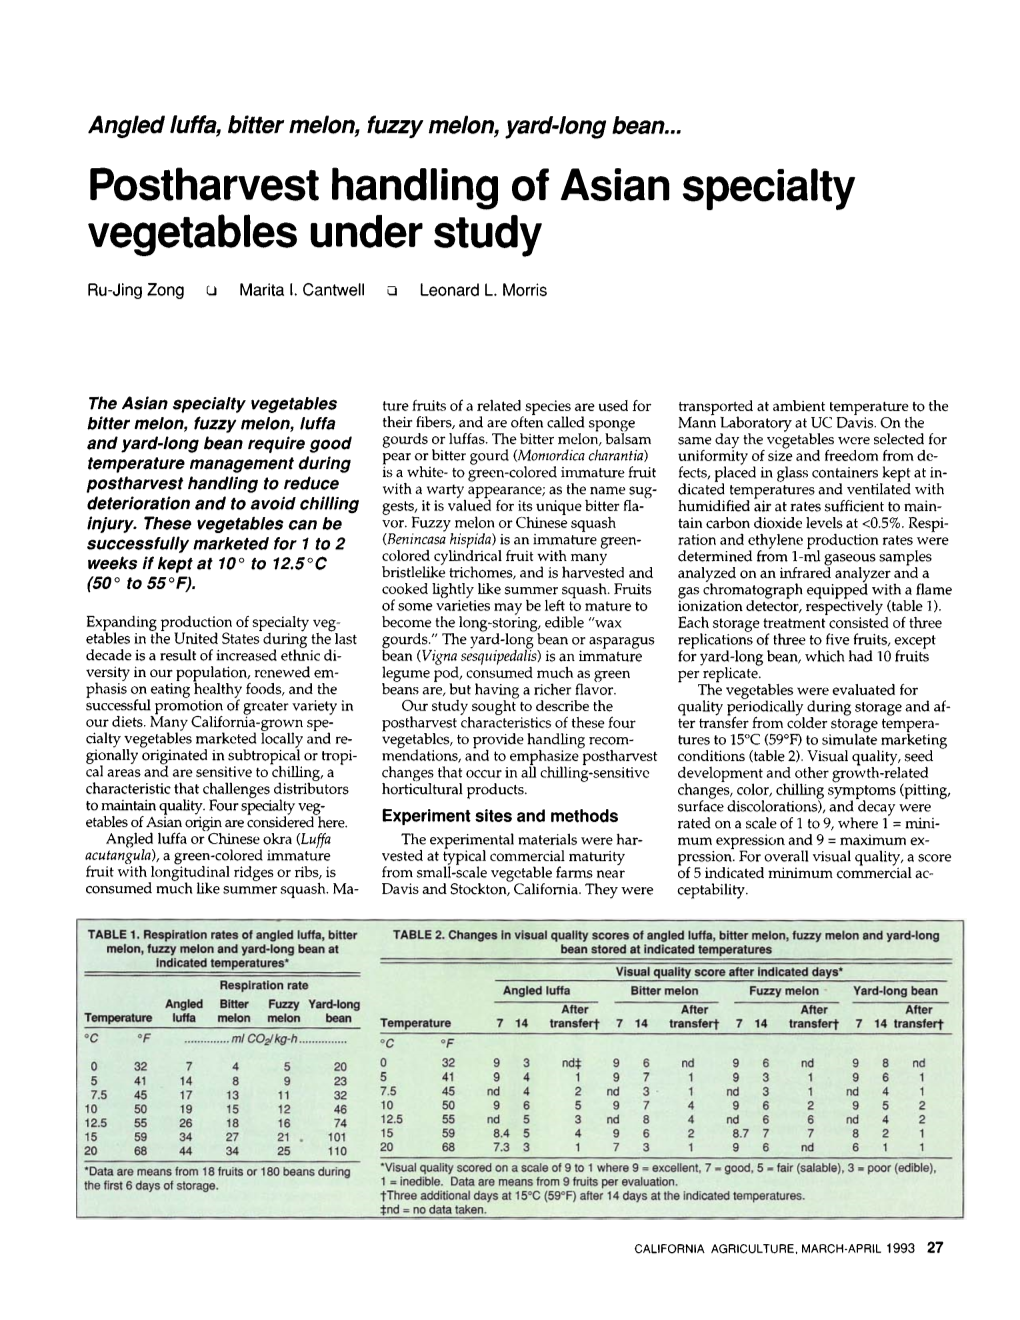 Postharvest Handling of Asian Specialty Vegetables Under Study